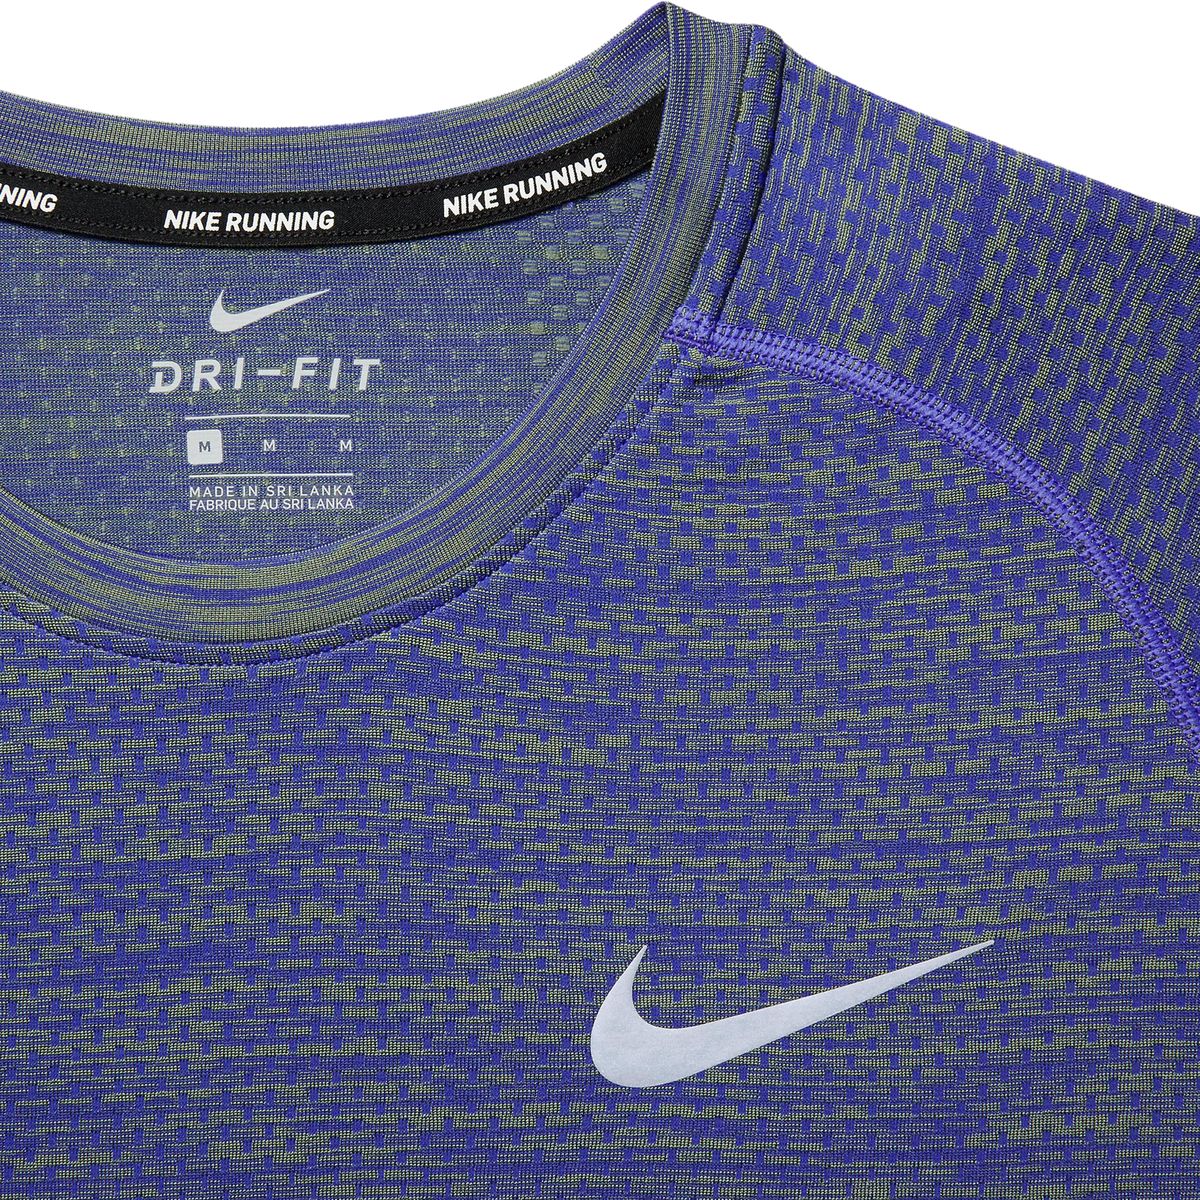 Nike Dri-FIT Knit Shirt - Clothing